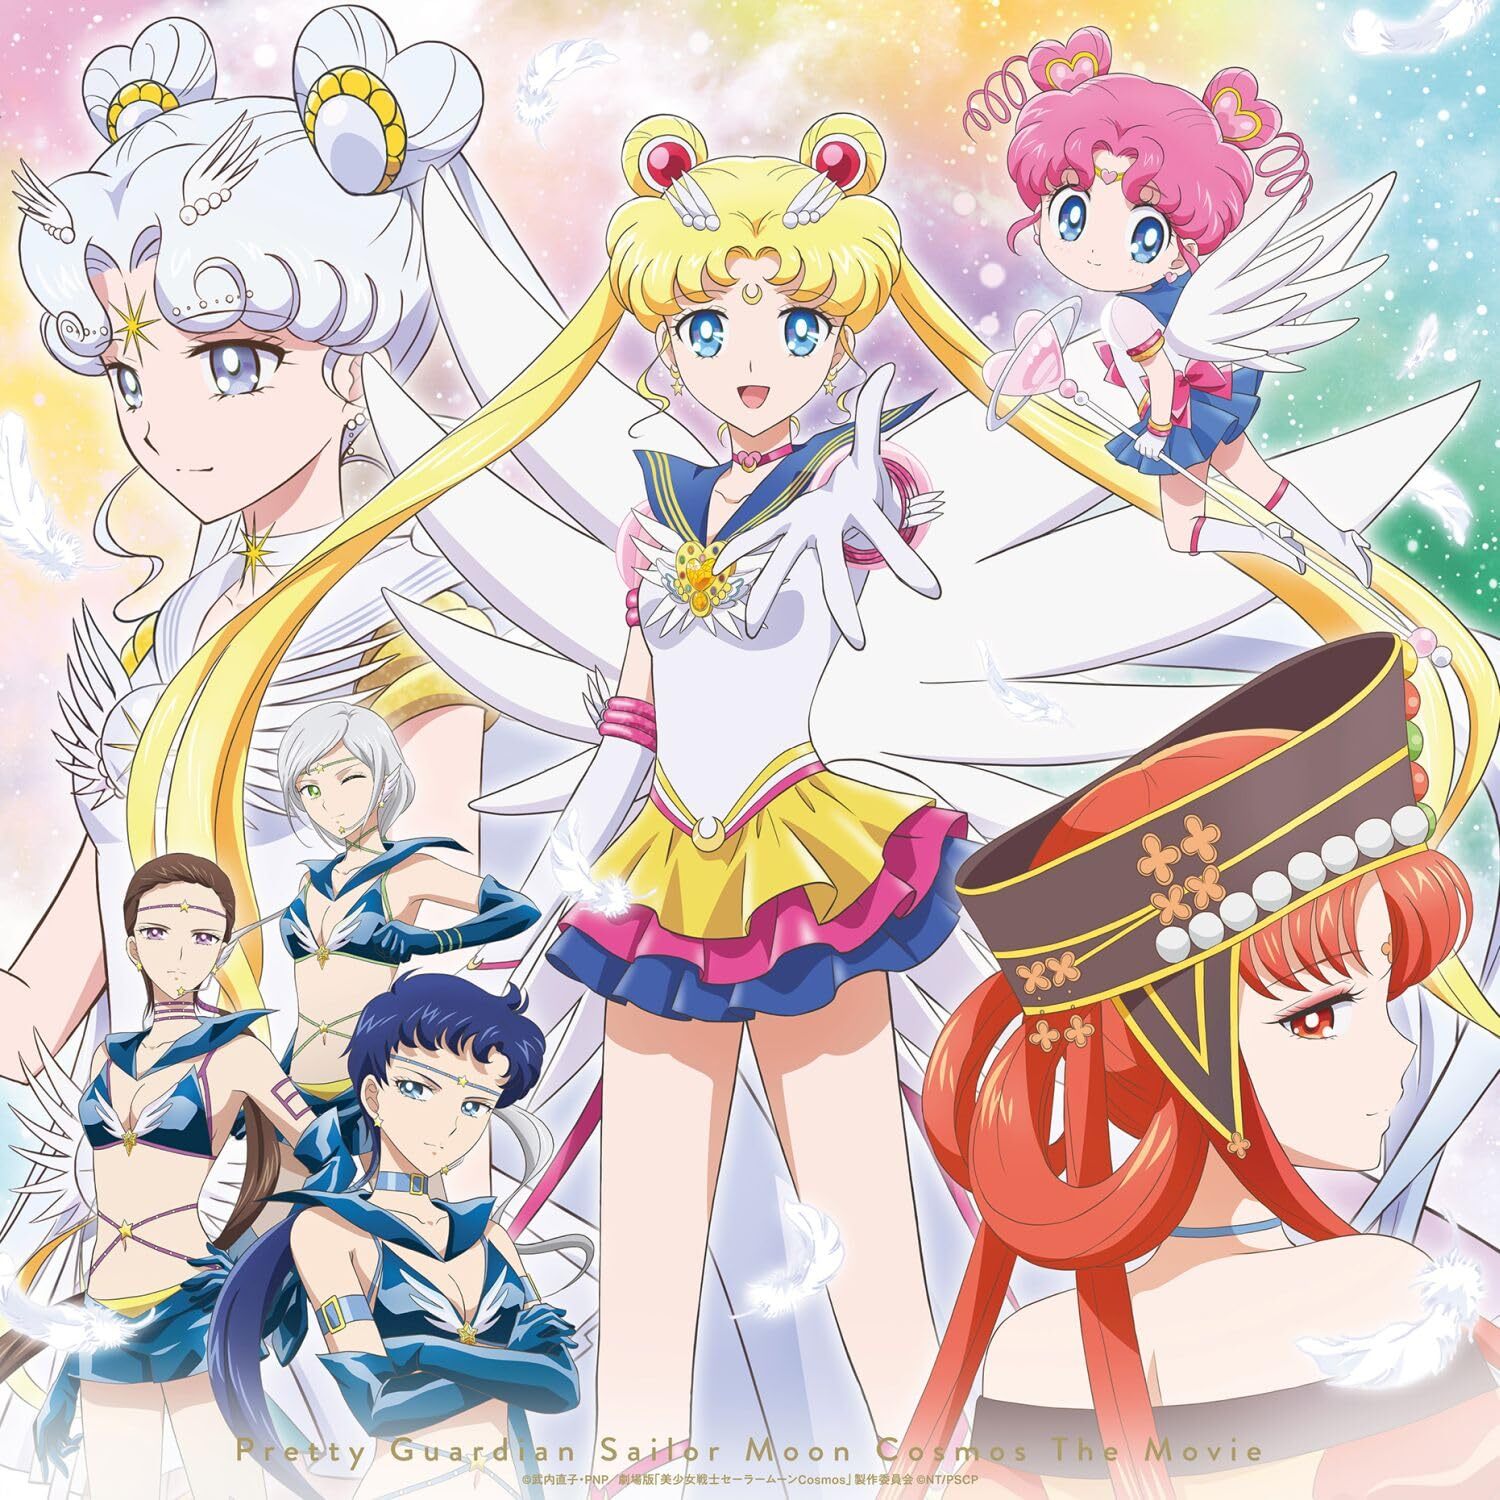 Pretty Guardian Sailor Moon Cosmos Blu-ray (Limited Edition) (Japan)